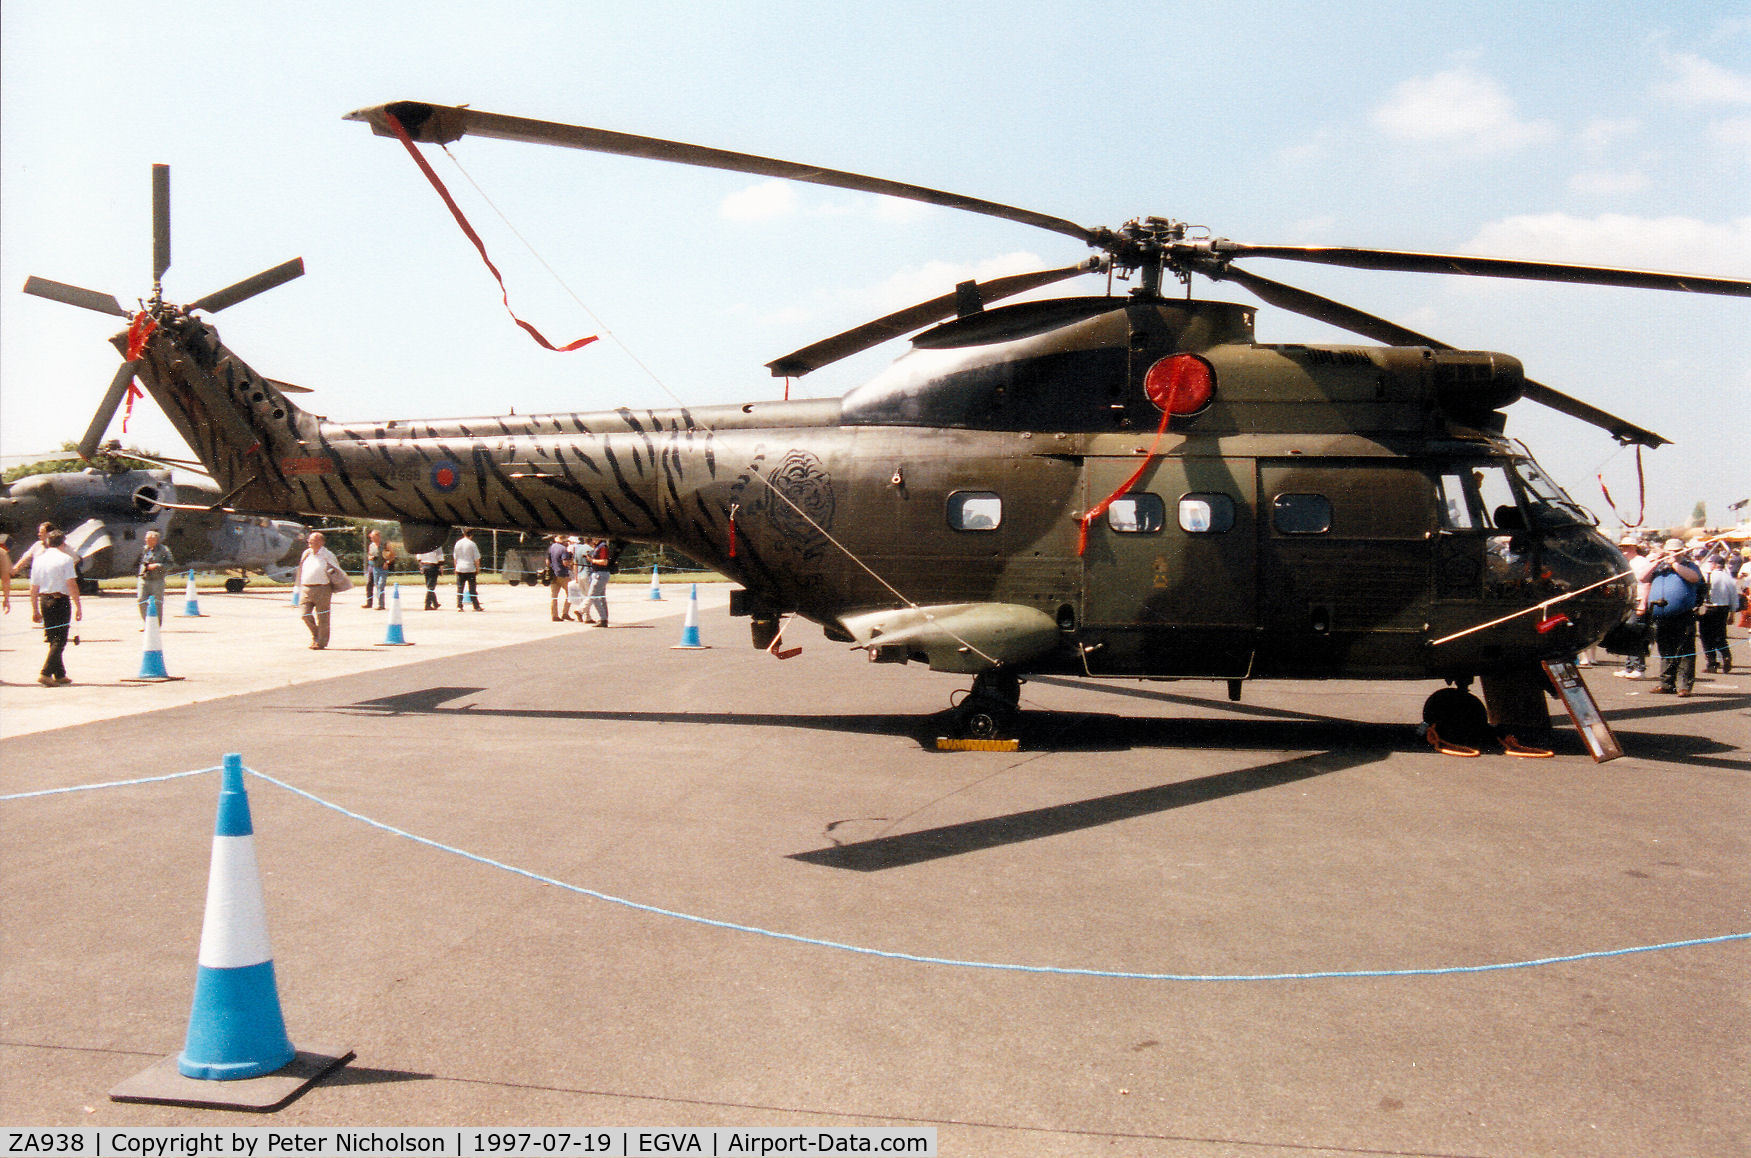 ZA938, 1980 Westland Puma HC.1 C/N 1650, Puma HC.1, callsign Tiger 69, of 230 Squadron at RAF Aldergrove, on display at the 1997 Intnl Air Tattoo at RAF Fairford.